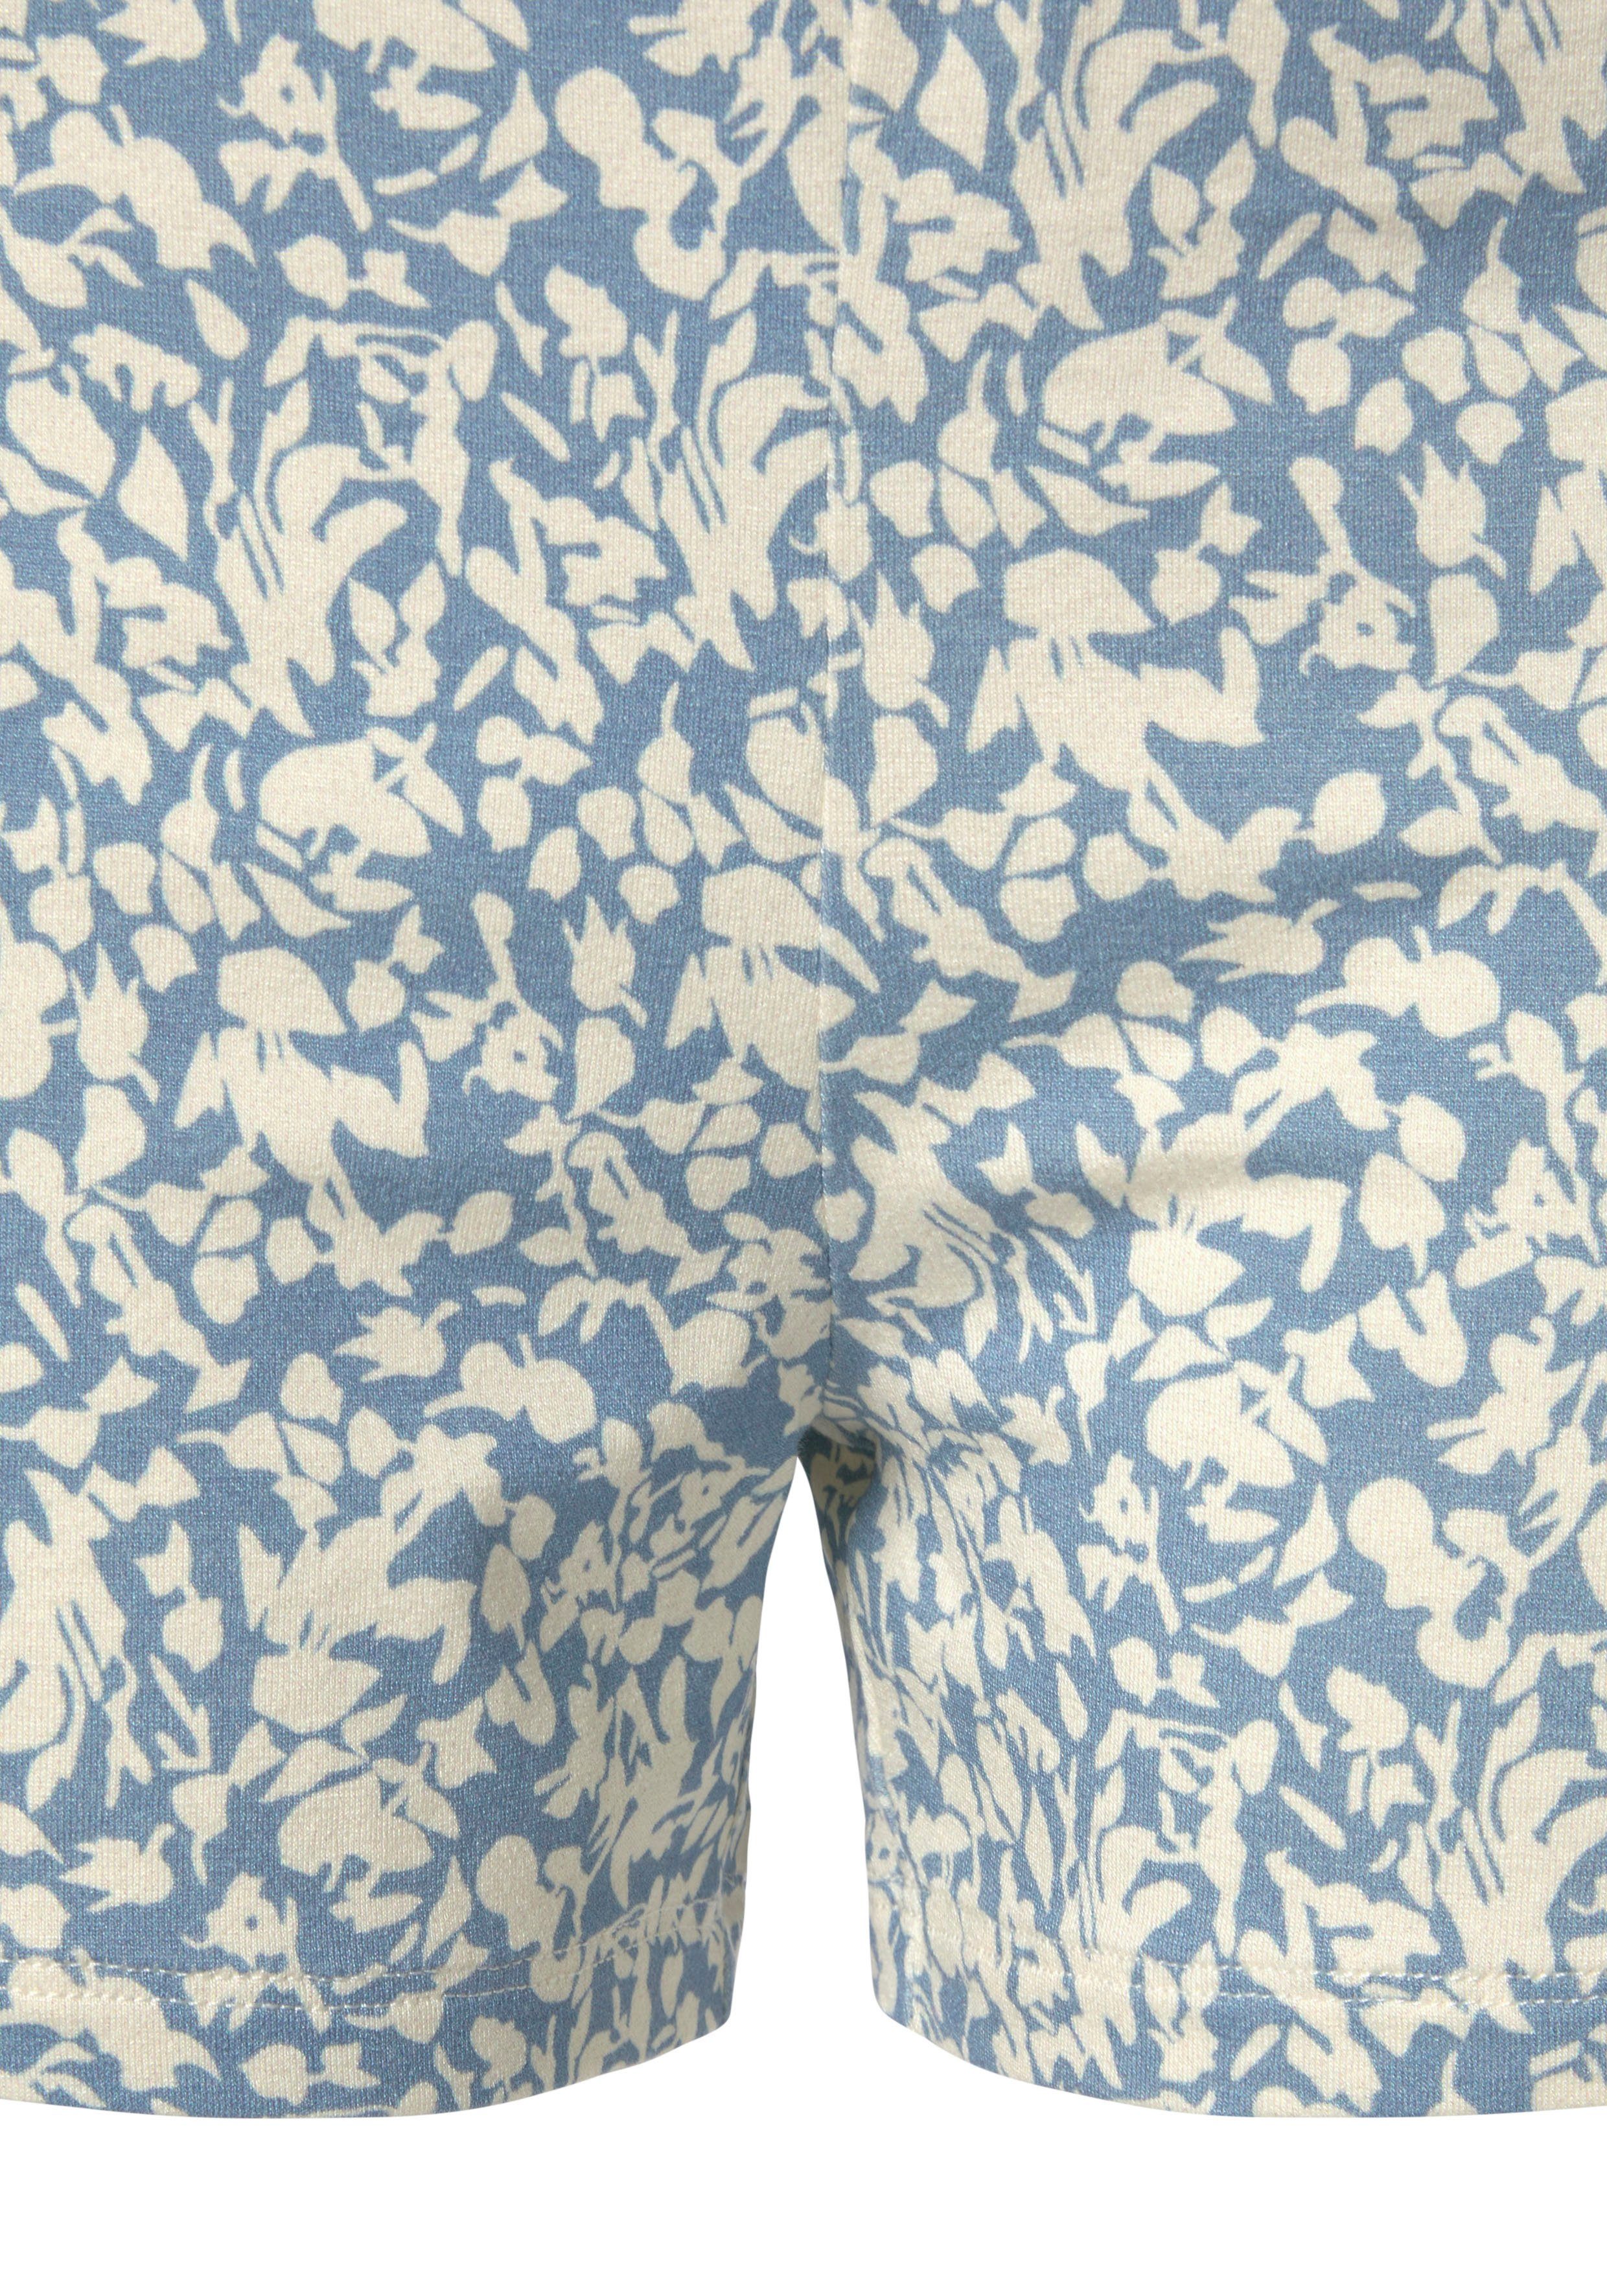 Vivance mit Hosenrock Blumendruck blau-creme-bedruckt